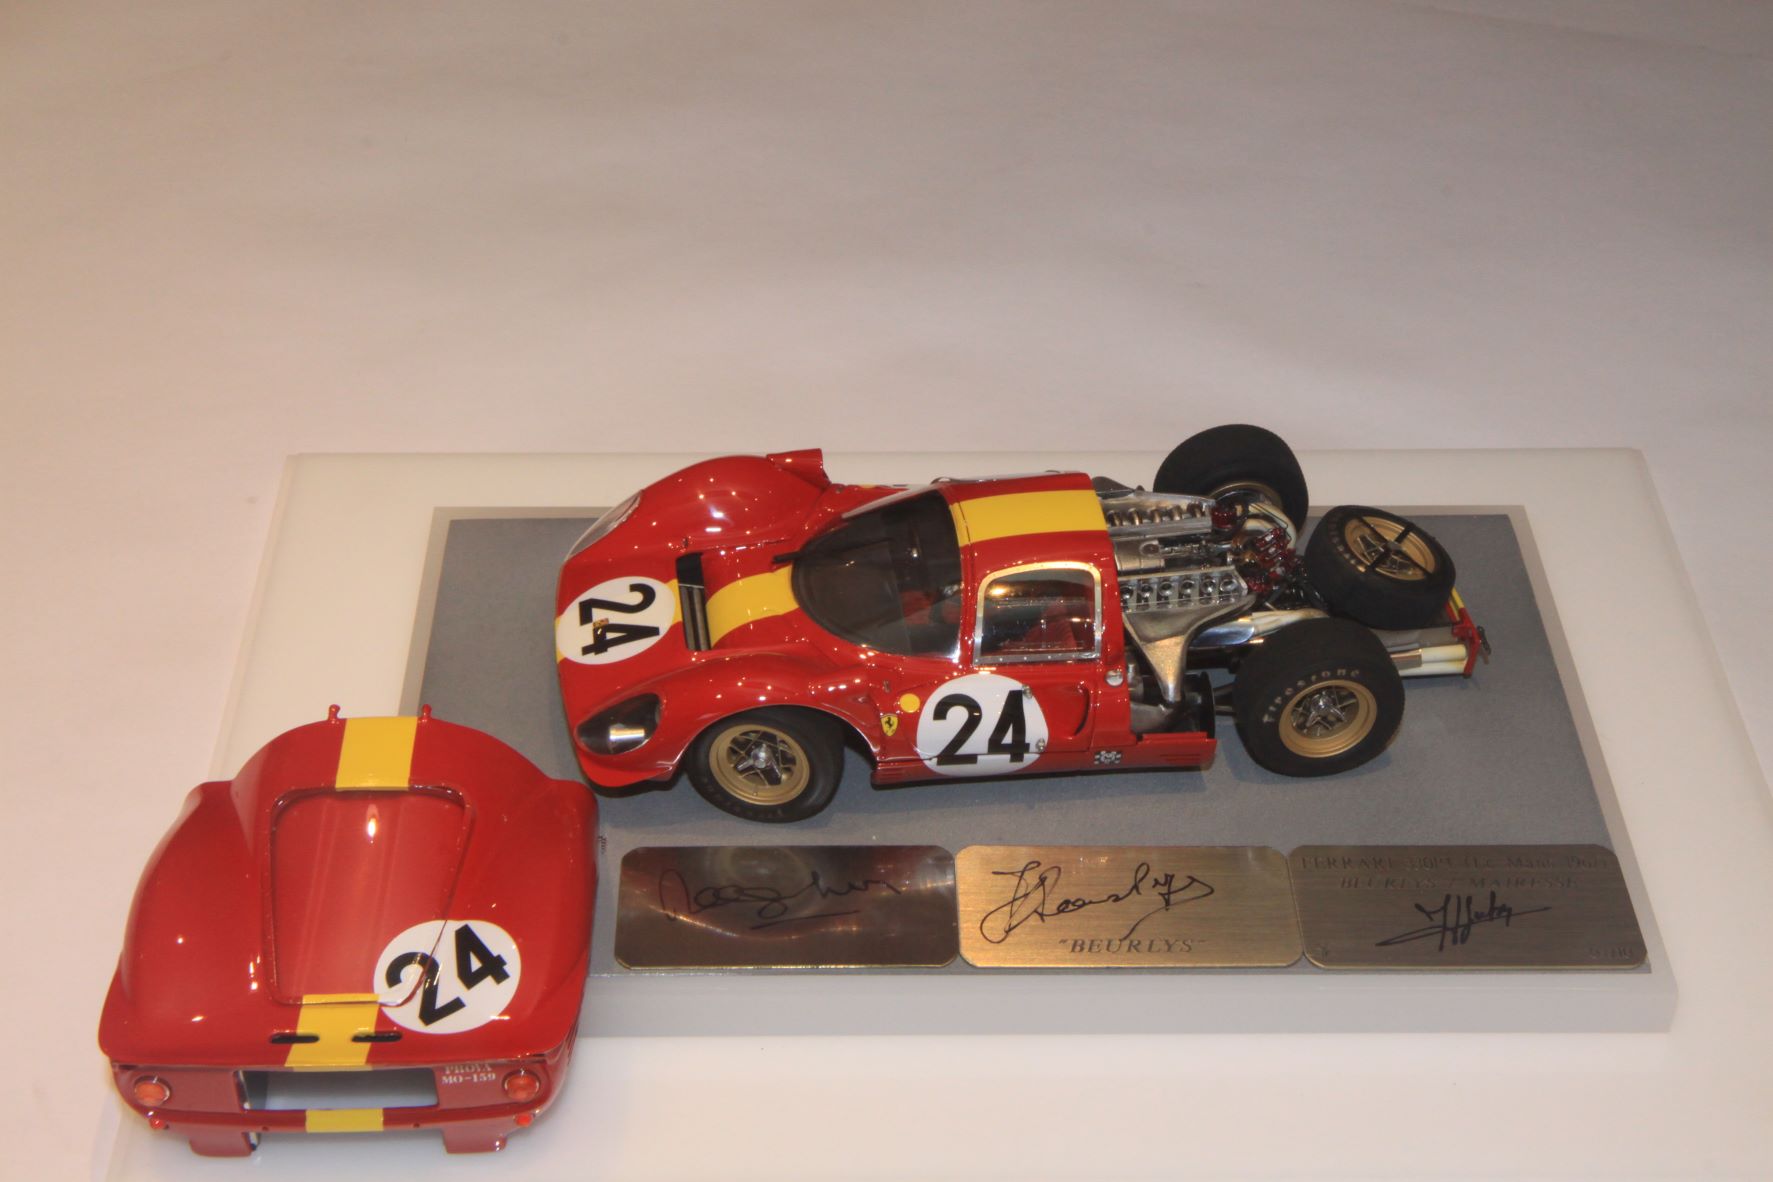 F. Suber : Ferrari 330 P4 Le Mans 1967 - 1/24 scale -->SOLD